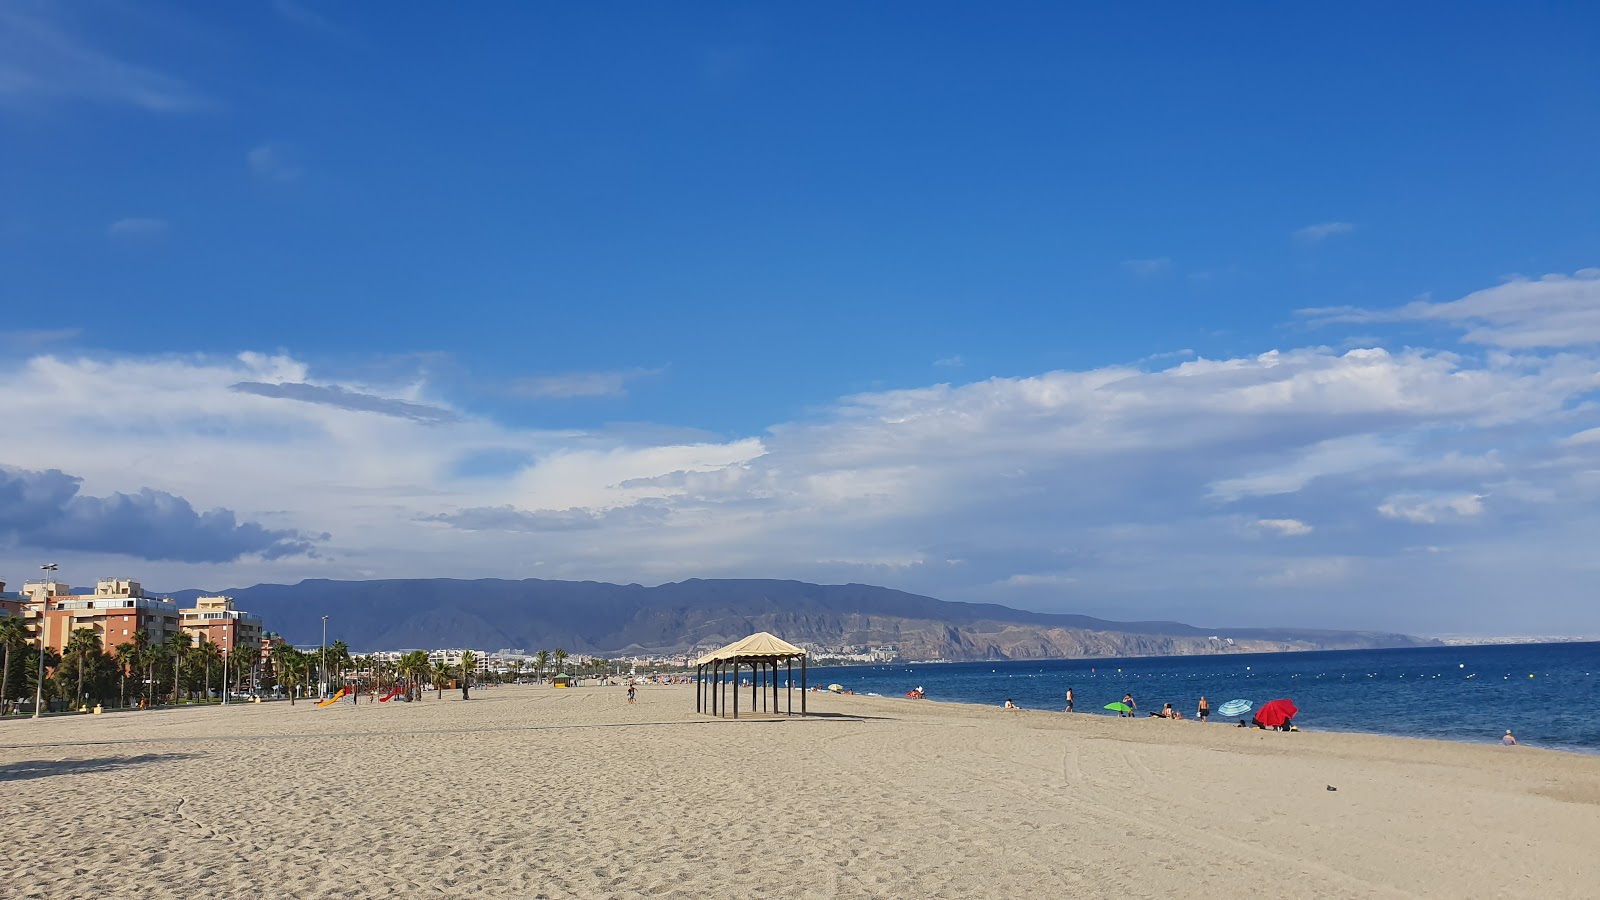 Foto di Playa de la Romanilla con una superficie del sabbia grigia